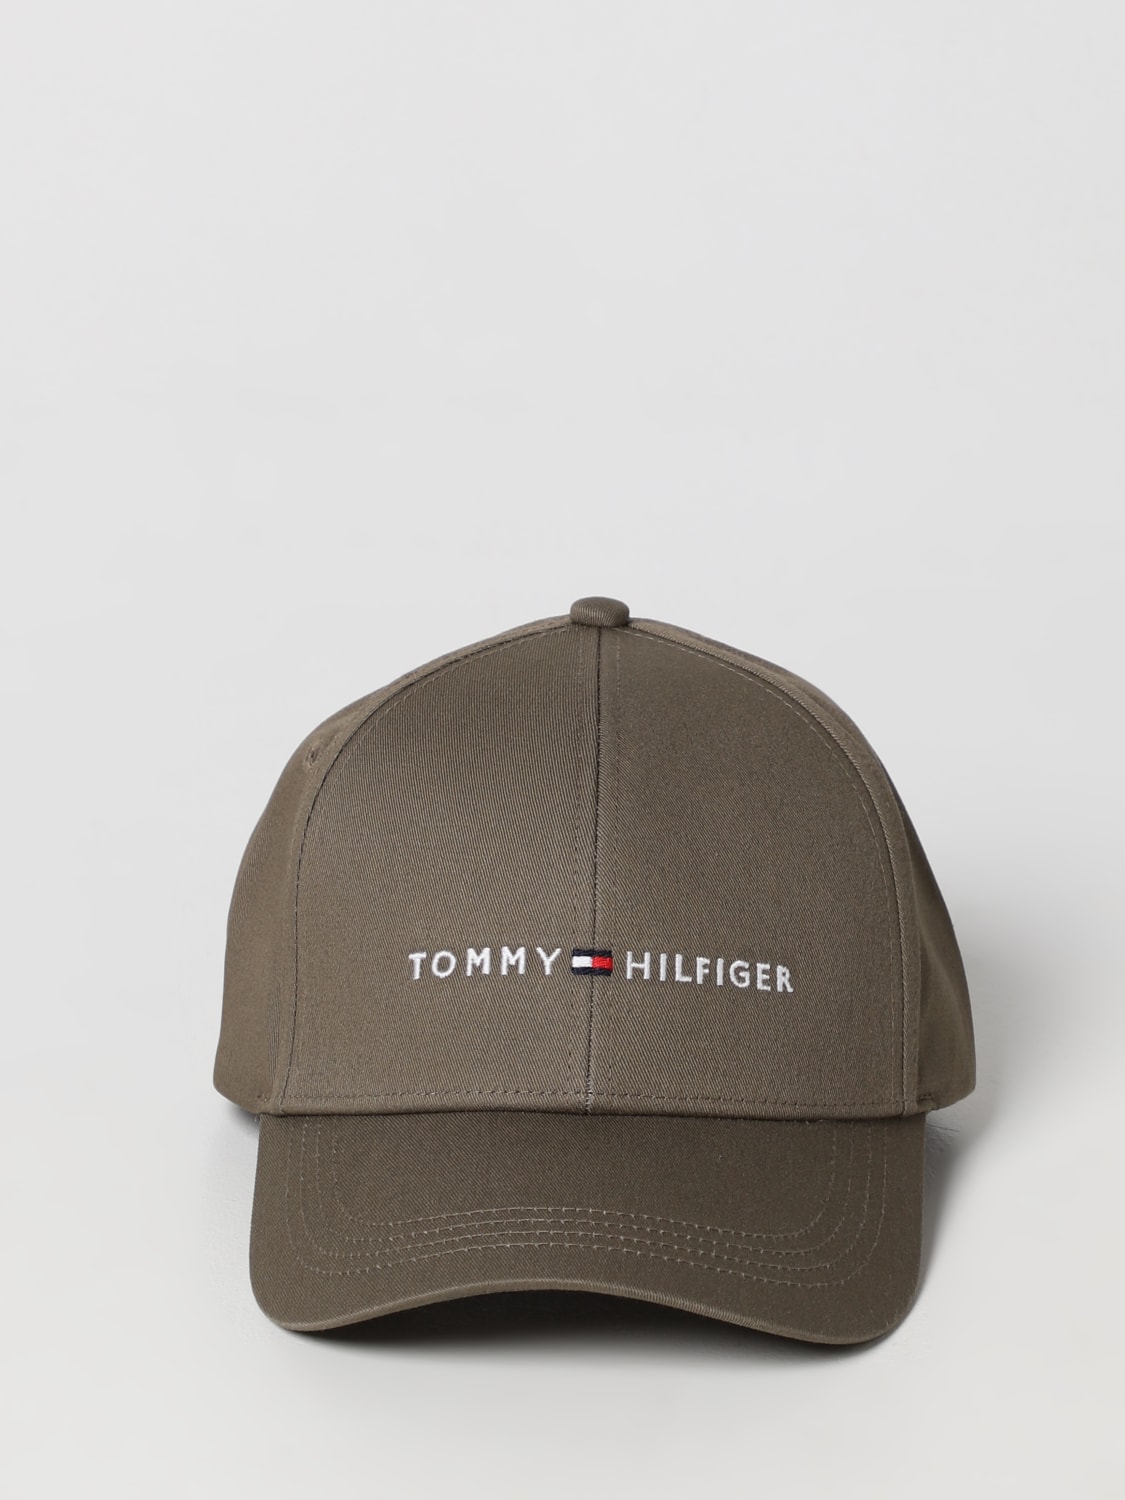 TOMMY HILFIGER: hat - Military | Tommy Hilfiger hat AM0AM11244 online at GIGLIO.COM